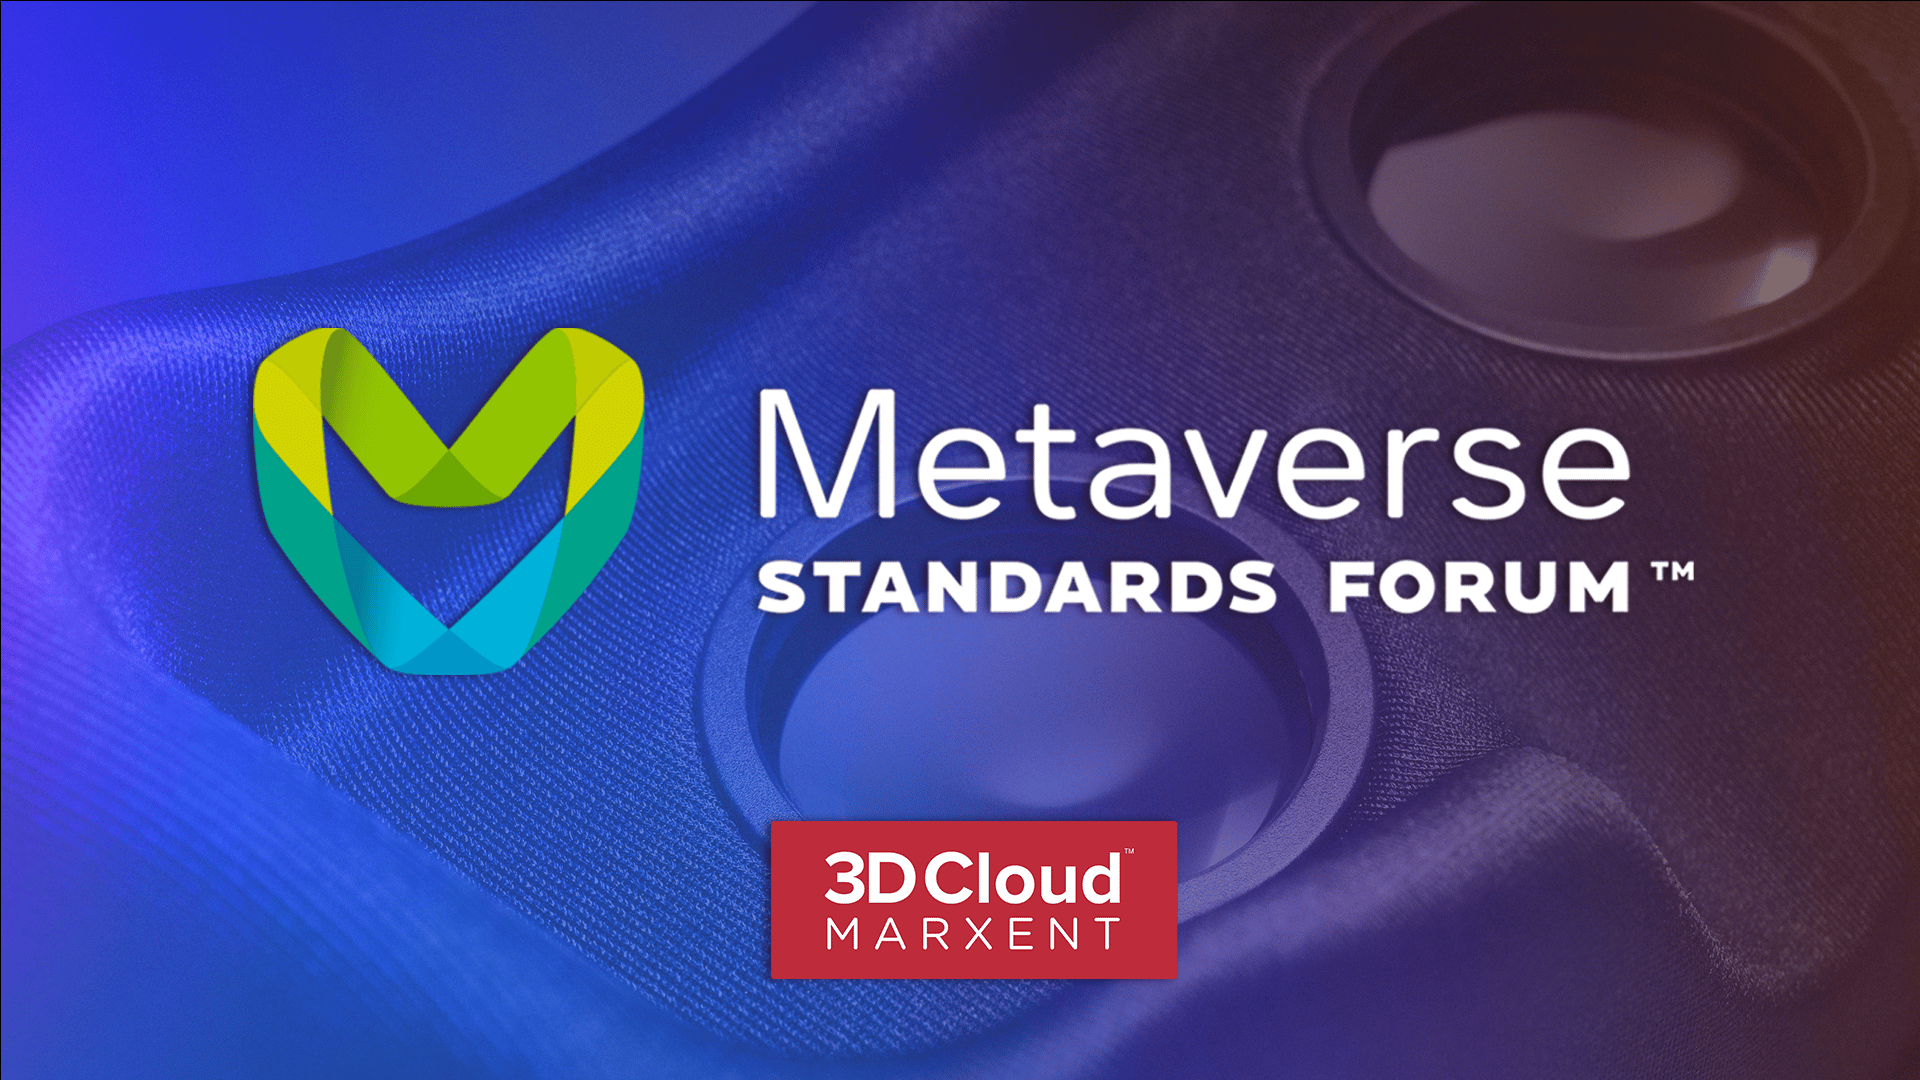 Metaverse Standards Forum Announcement